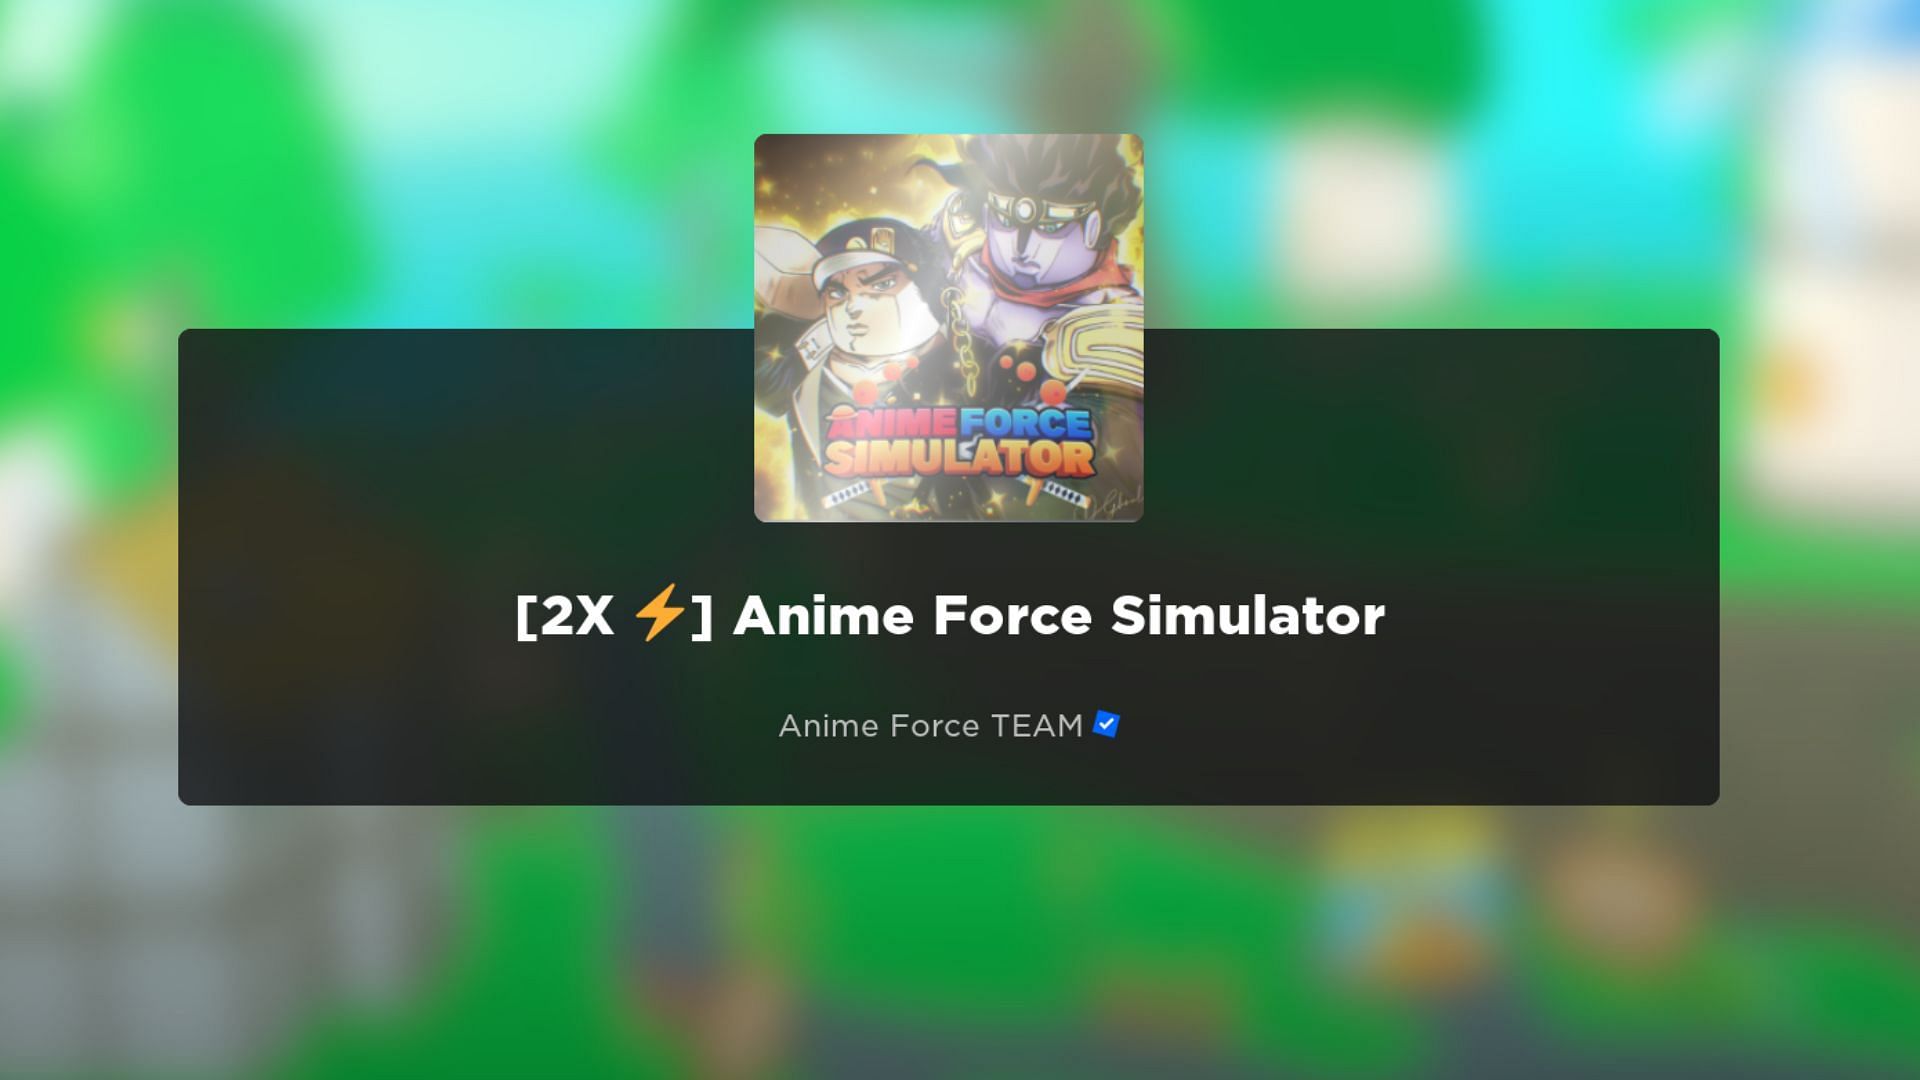 Anime Force Simulator Codes